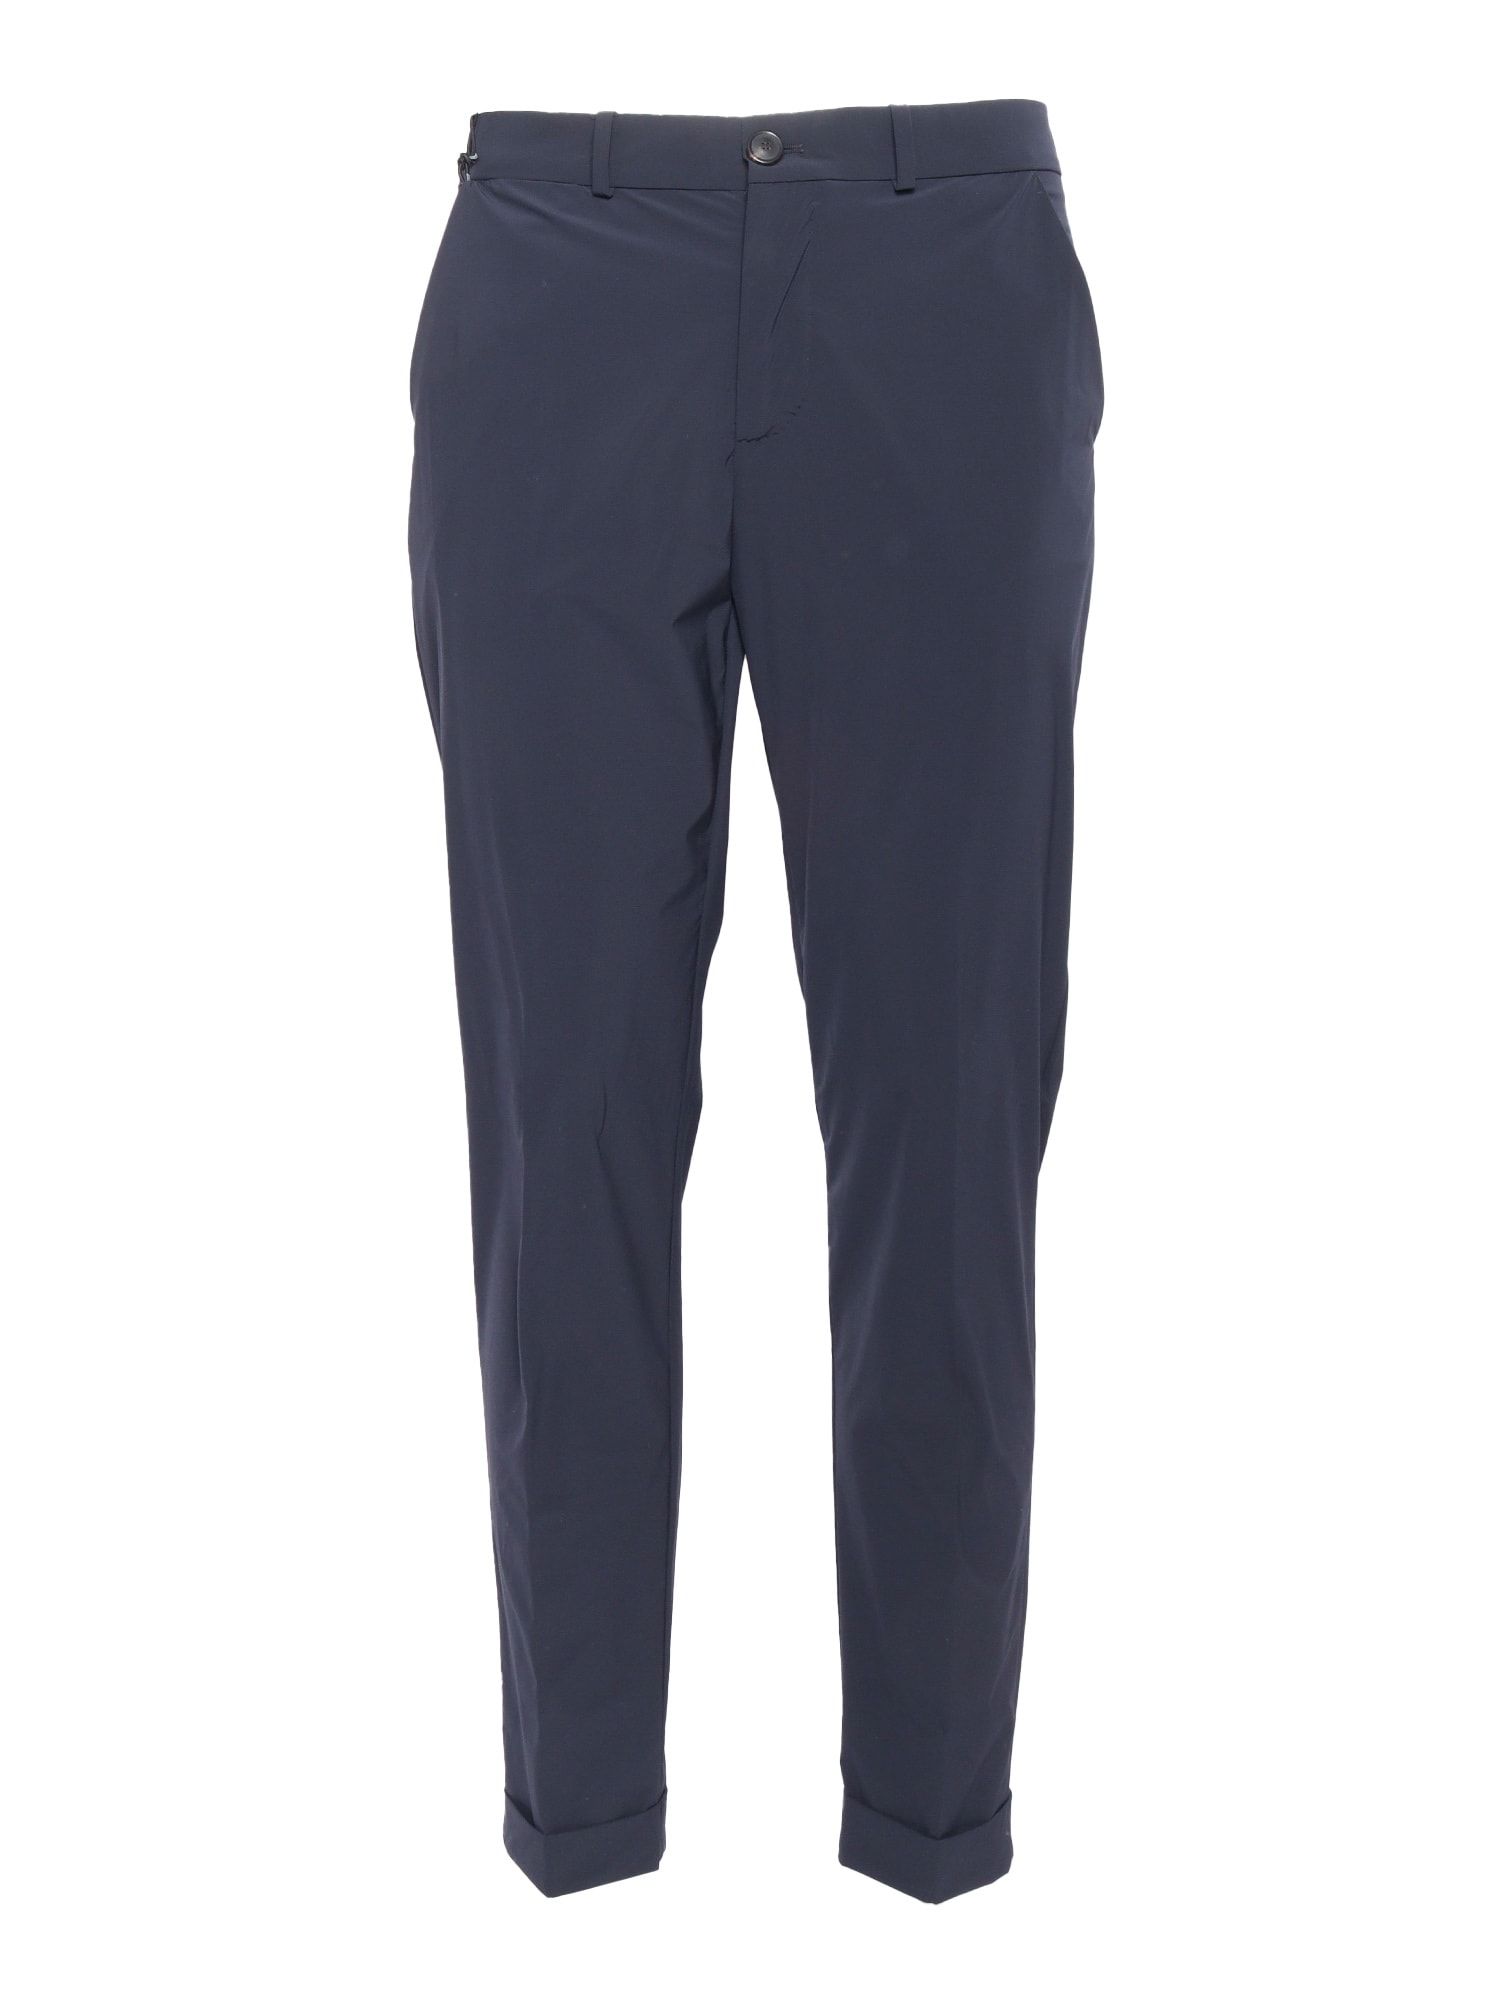 Shop Rrd - Roberto Ricci Design Extralight Blue Chino Trousers